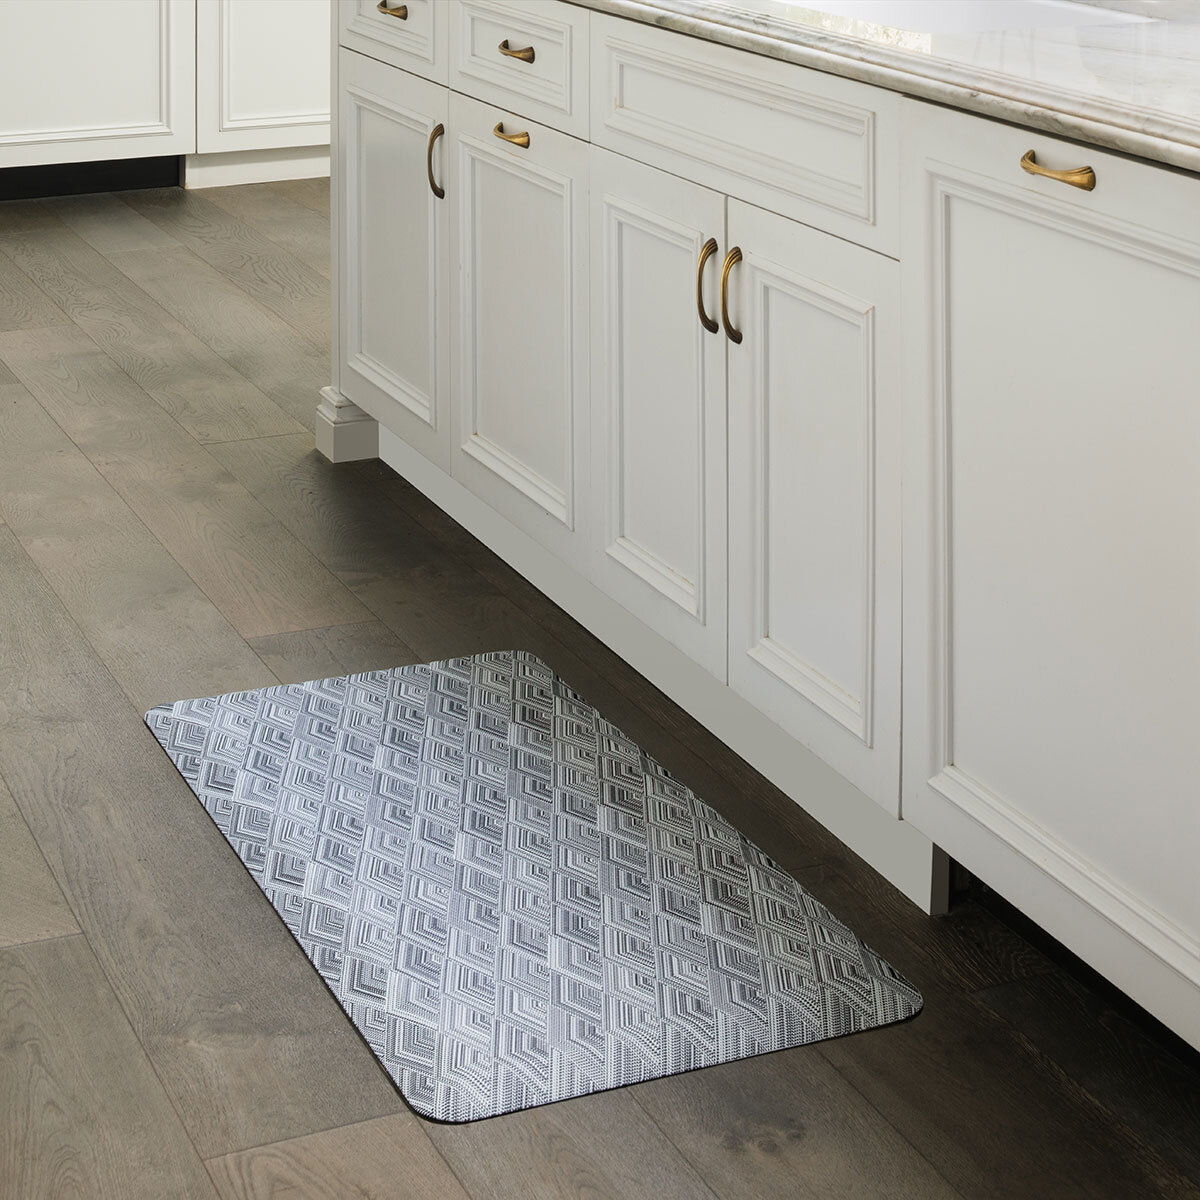 No-rinse coffee mat kitchen countertop mat - Bed Bath & Beyond - 39524742